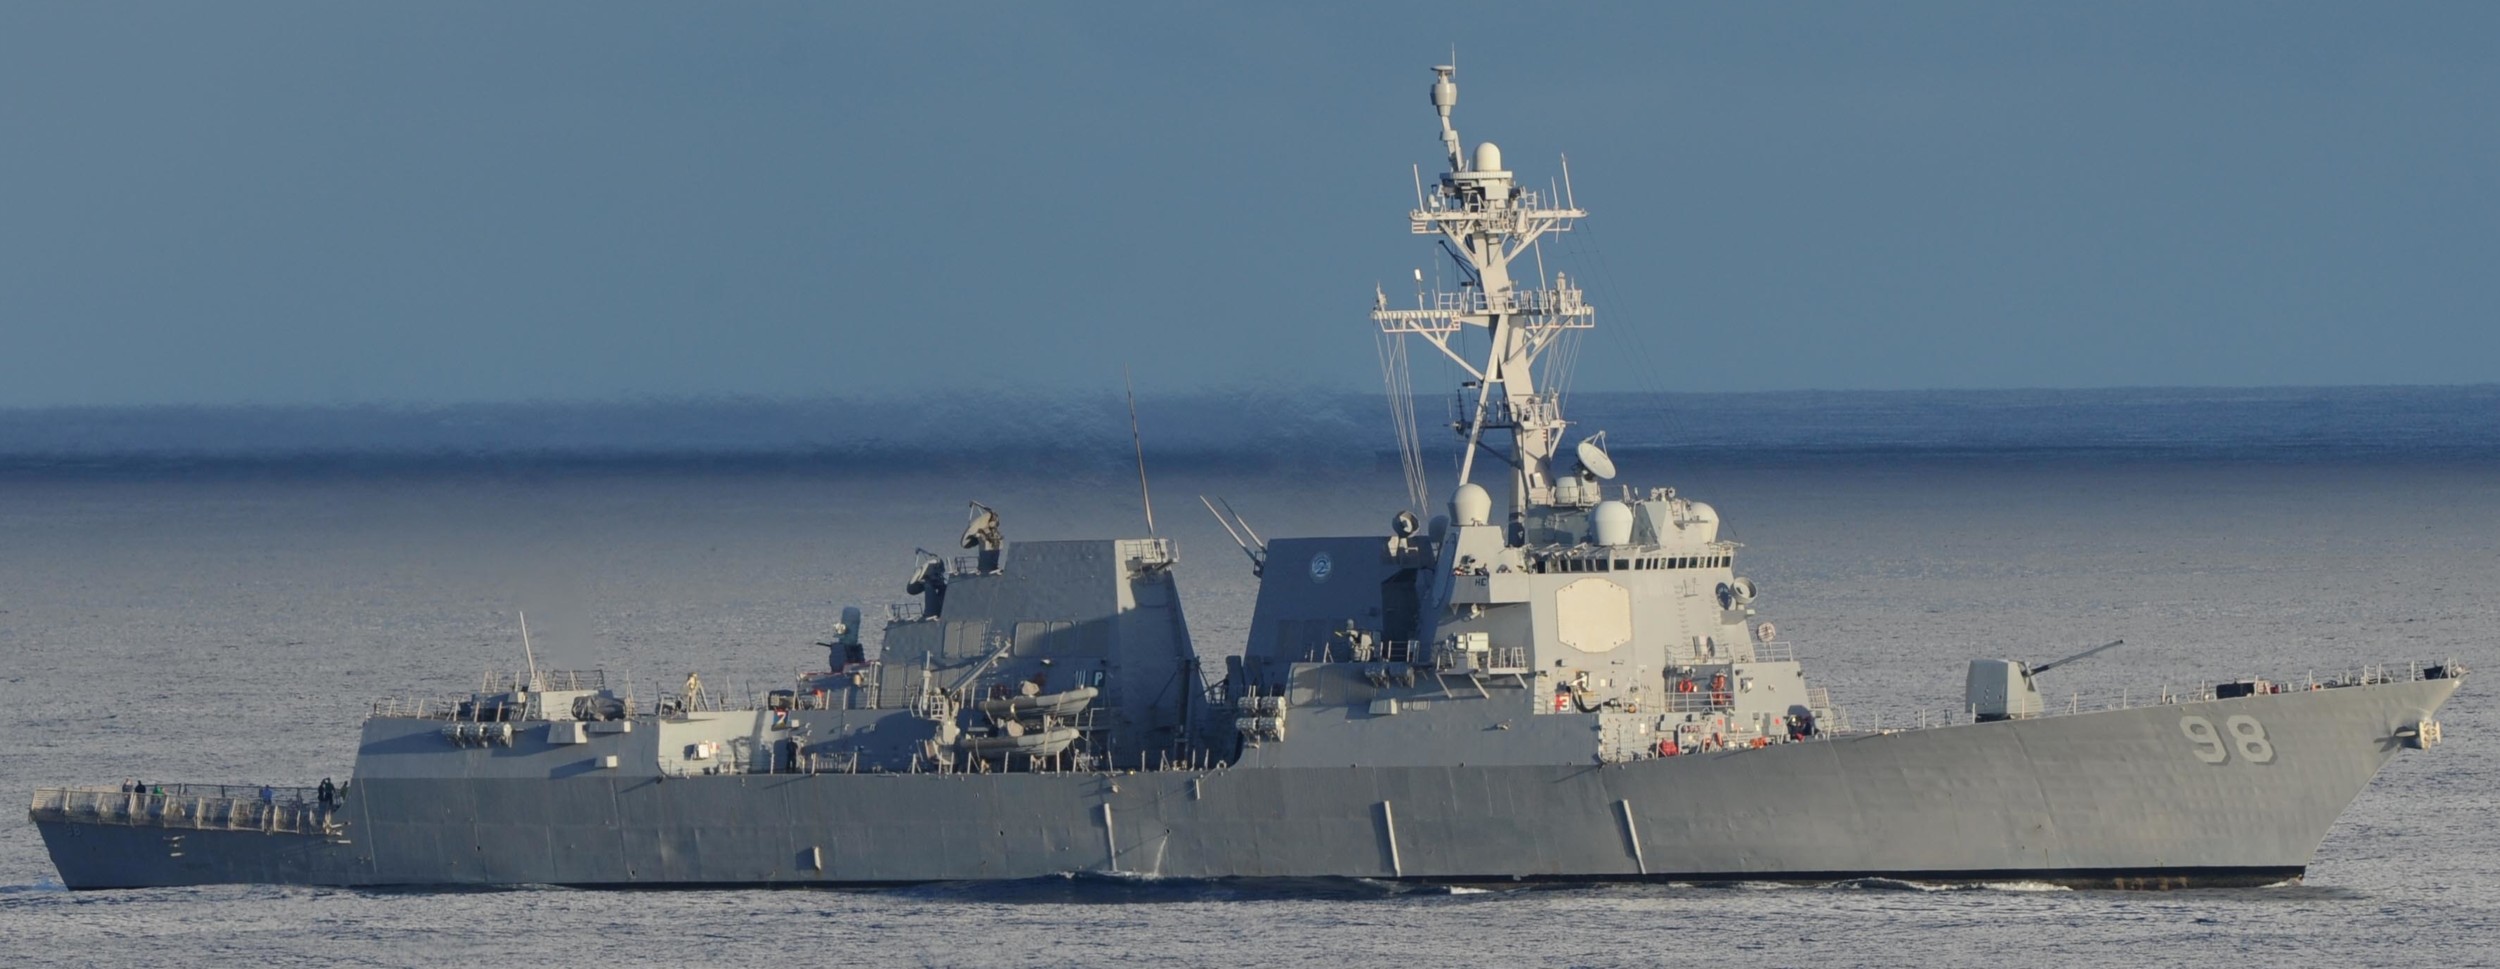 ddg-98 uss forrest sherman arleigh burke class guided missile destroyer aegis us navy 25